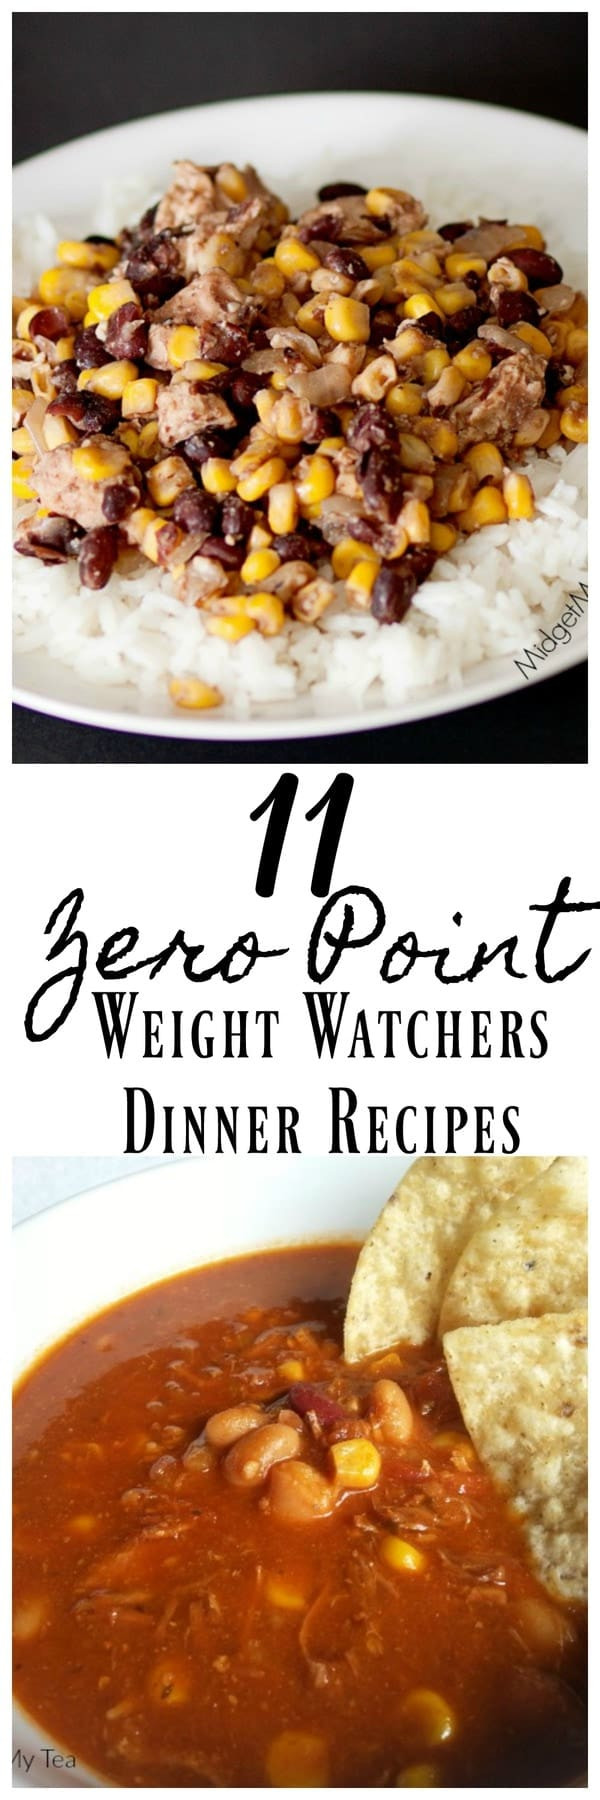 Weight Watchers Dinners
 11 Zero Point Weight Watchers Dinner Recipes • Mid Momma